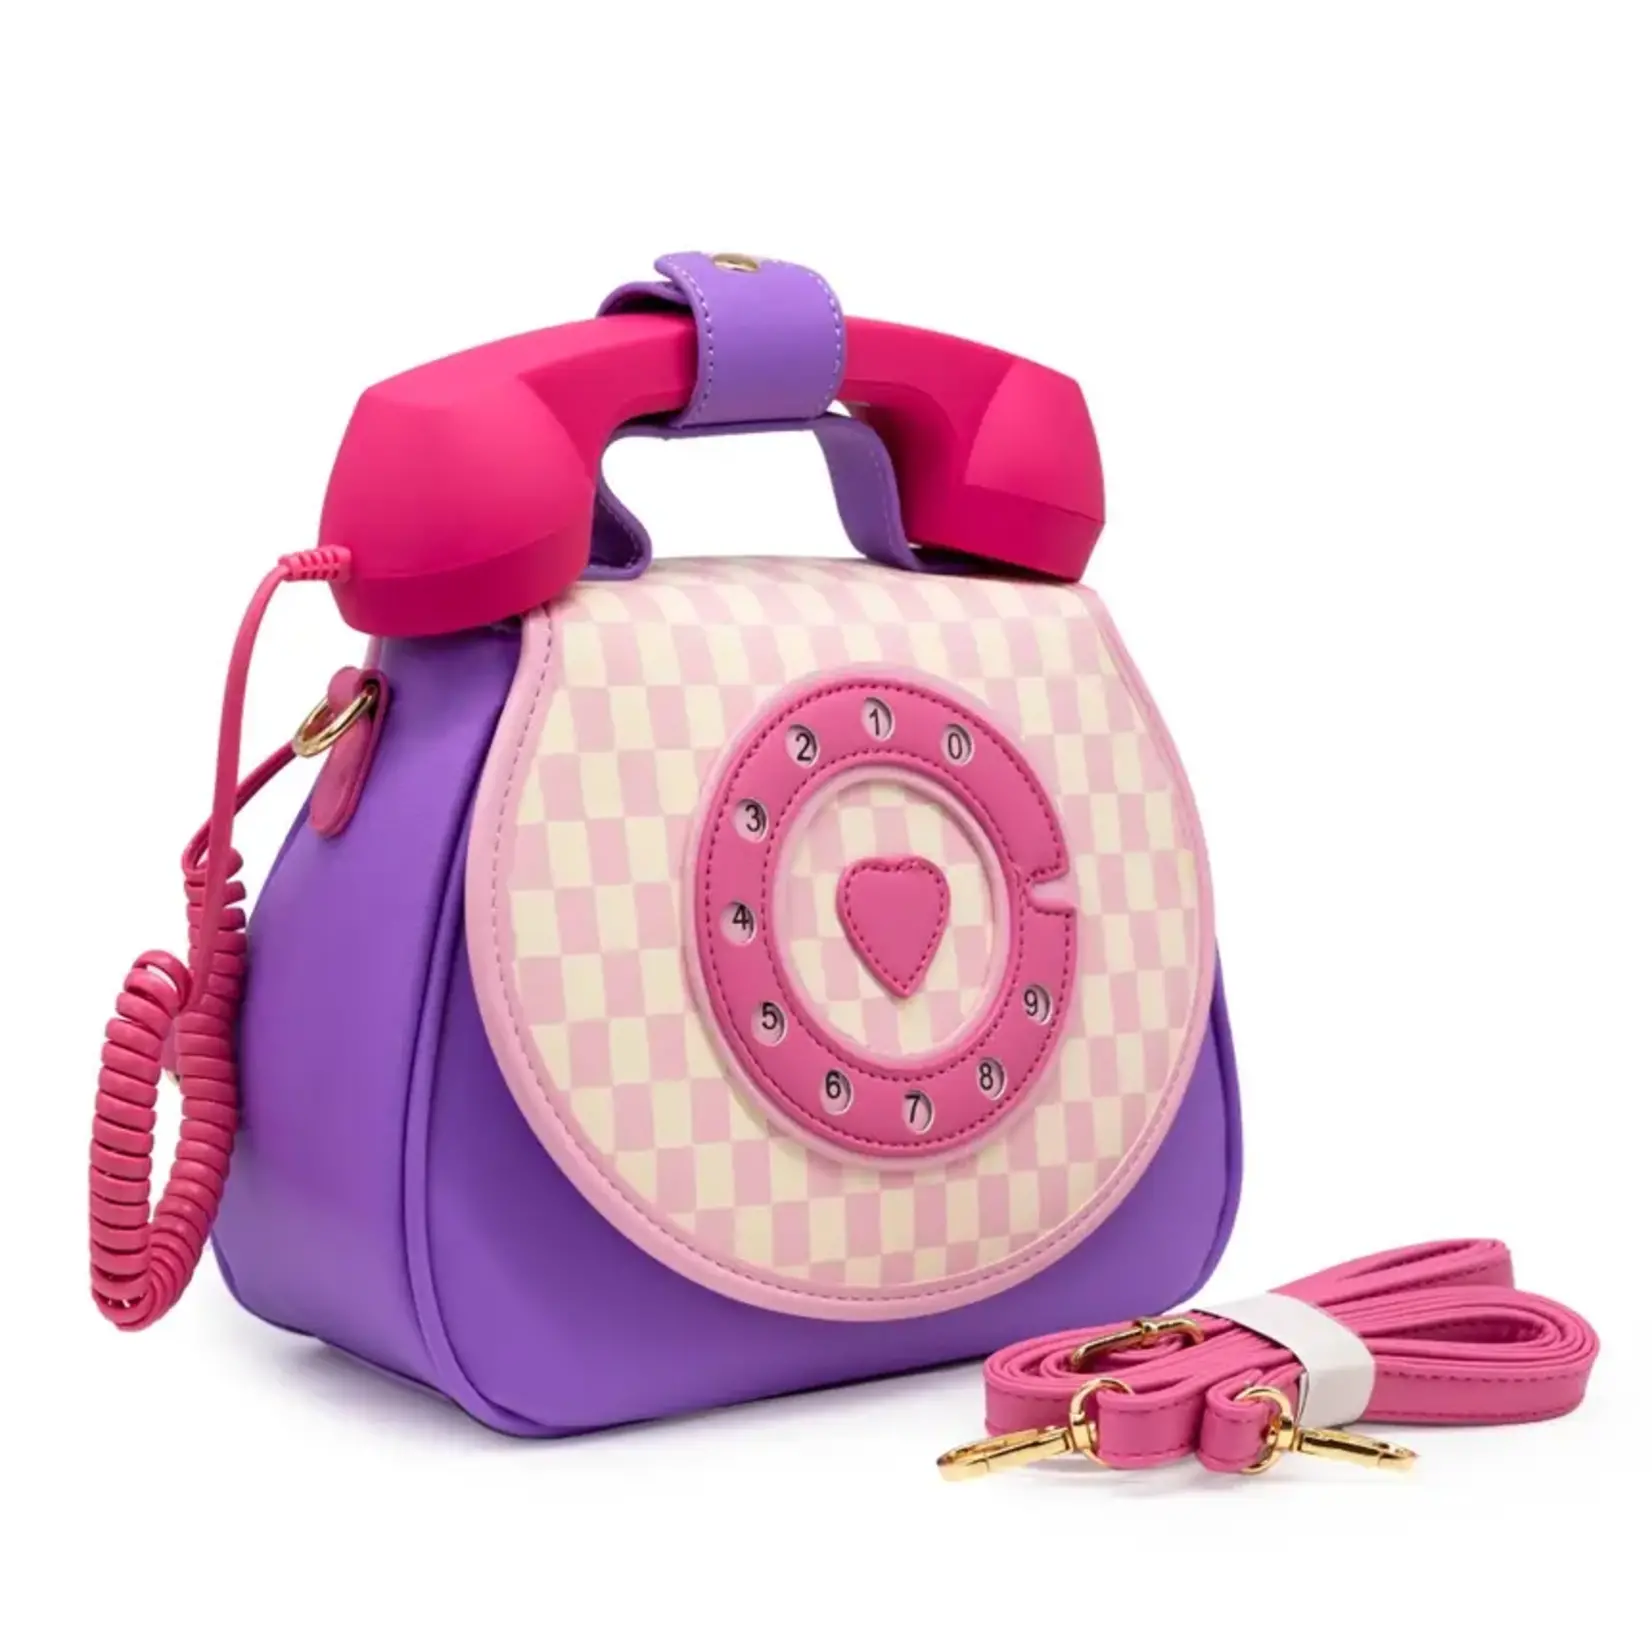 Bewaltz Ring Ring Phone Convertible Handbag - Pastel Checkerboard